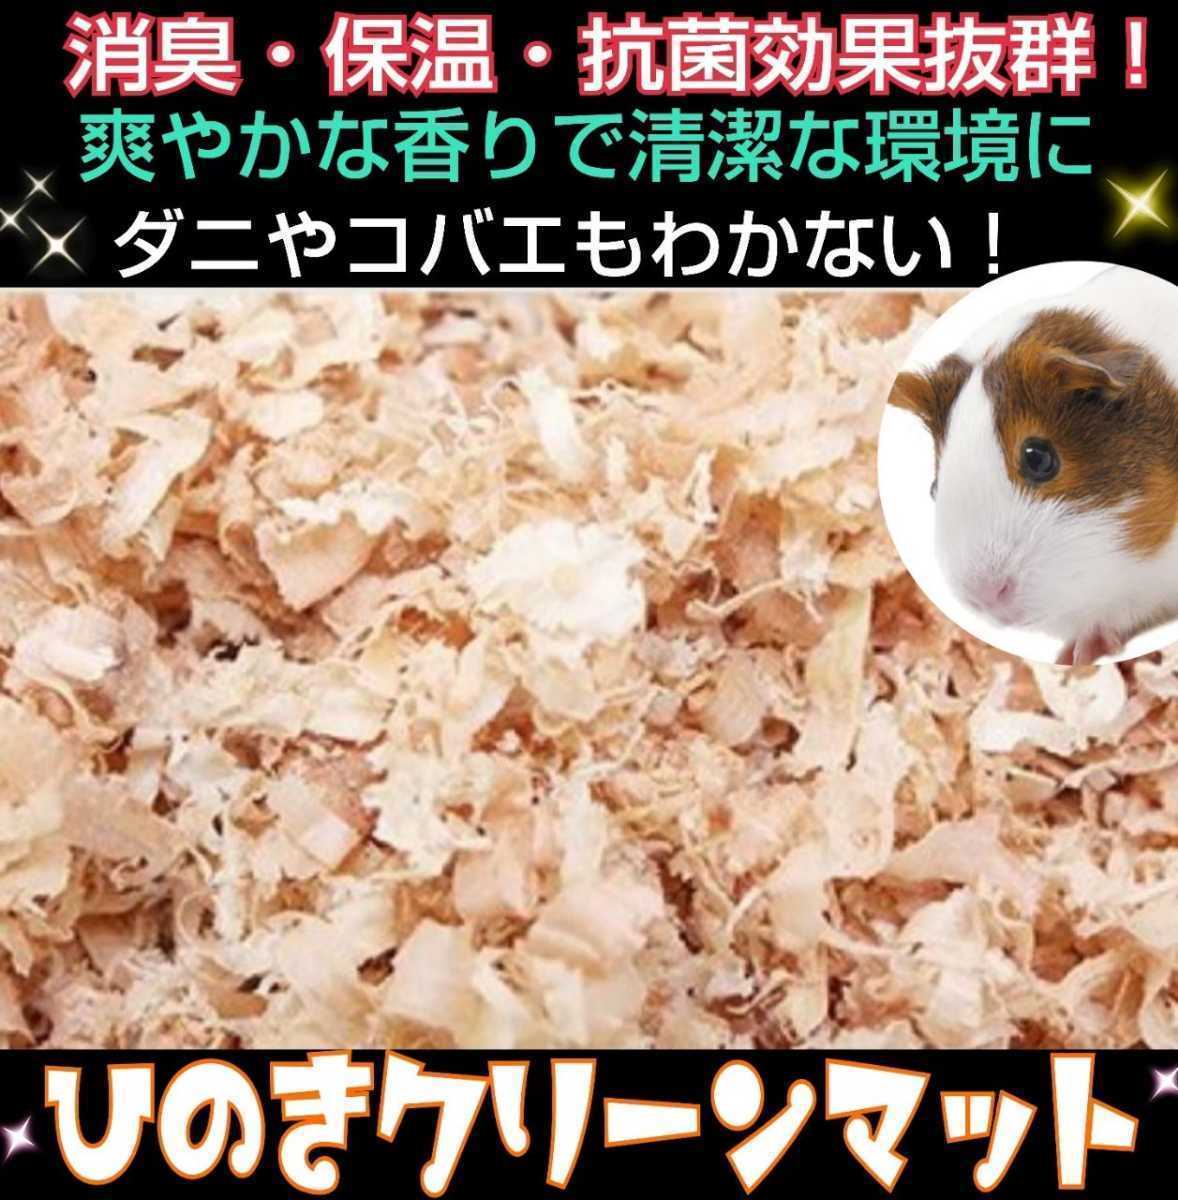  squirrel * hamster *morumoto* rabbit. flooring .! soft. needle leaved tree mat [2 sack ] mites *kobae prevention! anti-bacterial, deodorization effect equipped! refreshing . fragrance. 